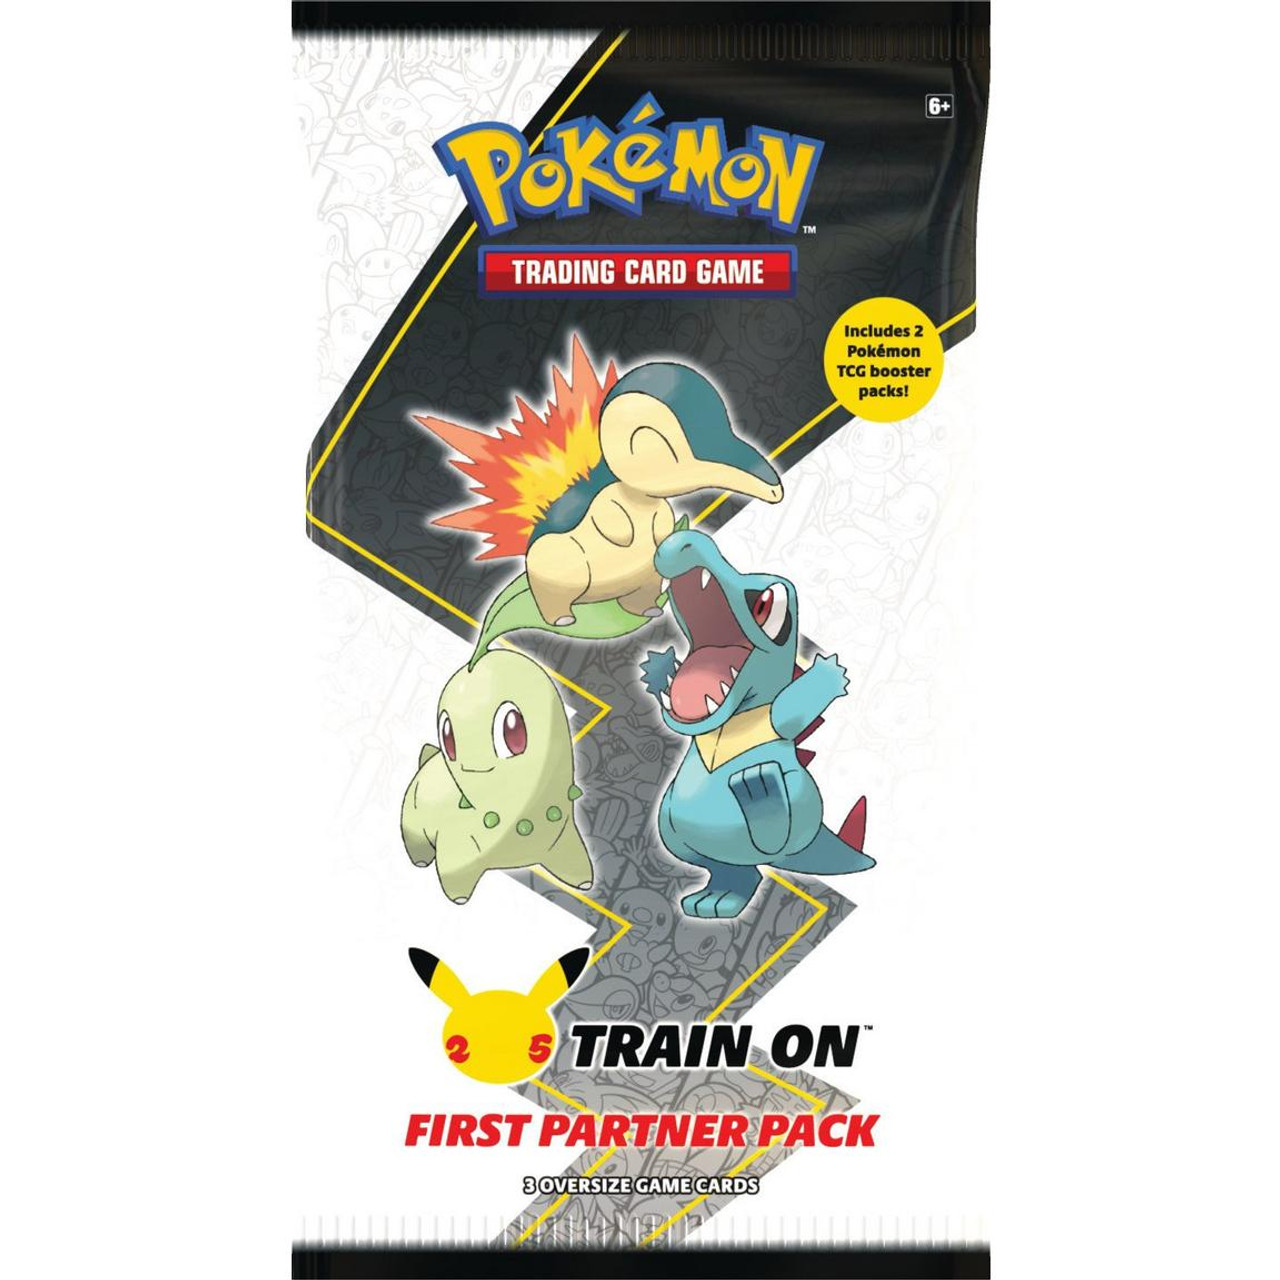 Pikachu, Chikorita, Cyndaquil & Totodile Pokémon Pins (4-Pack)